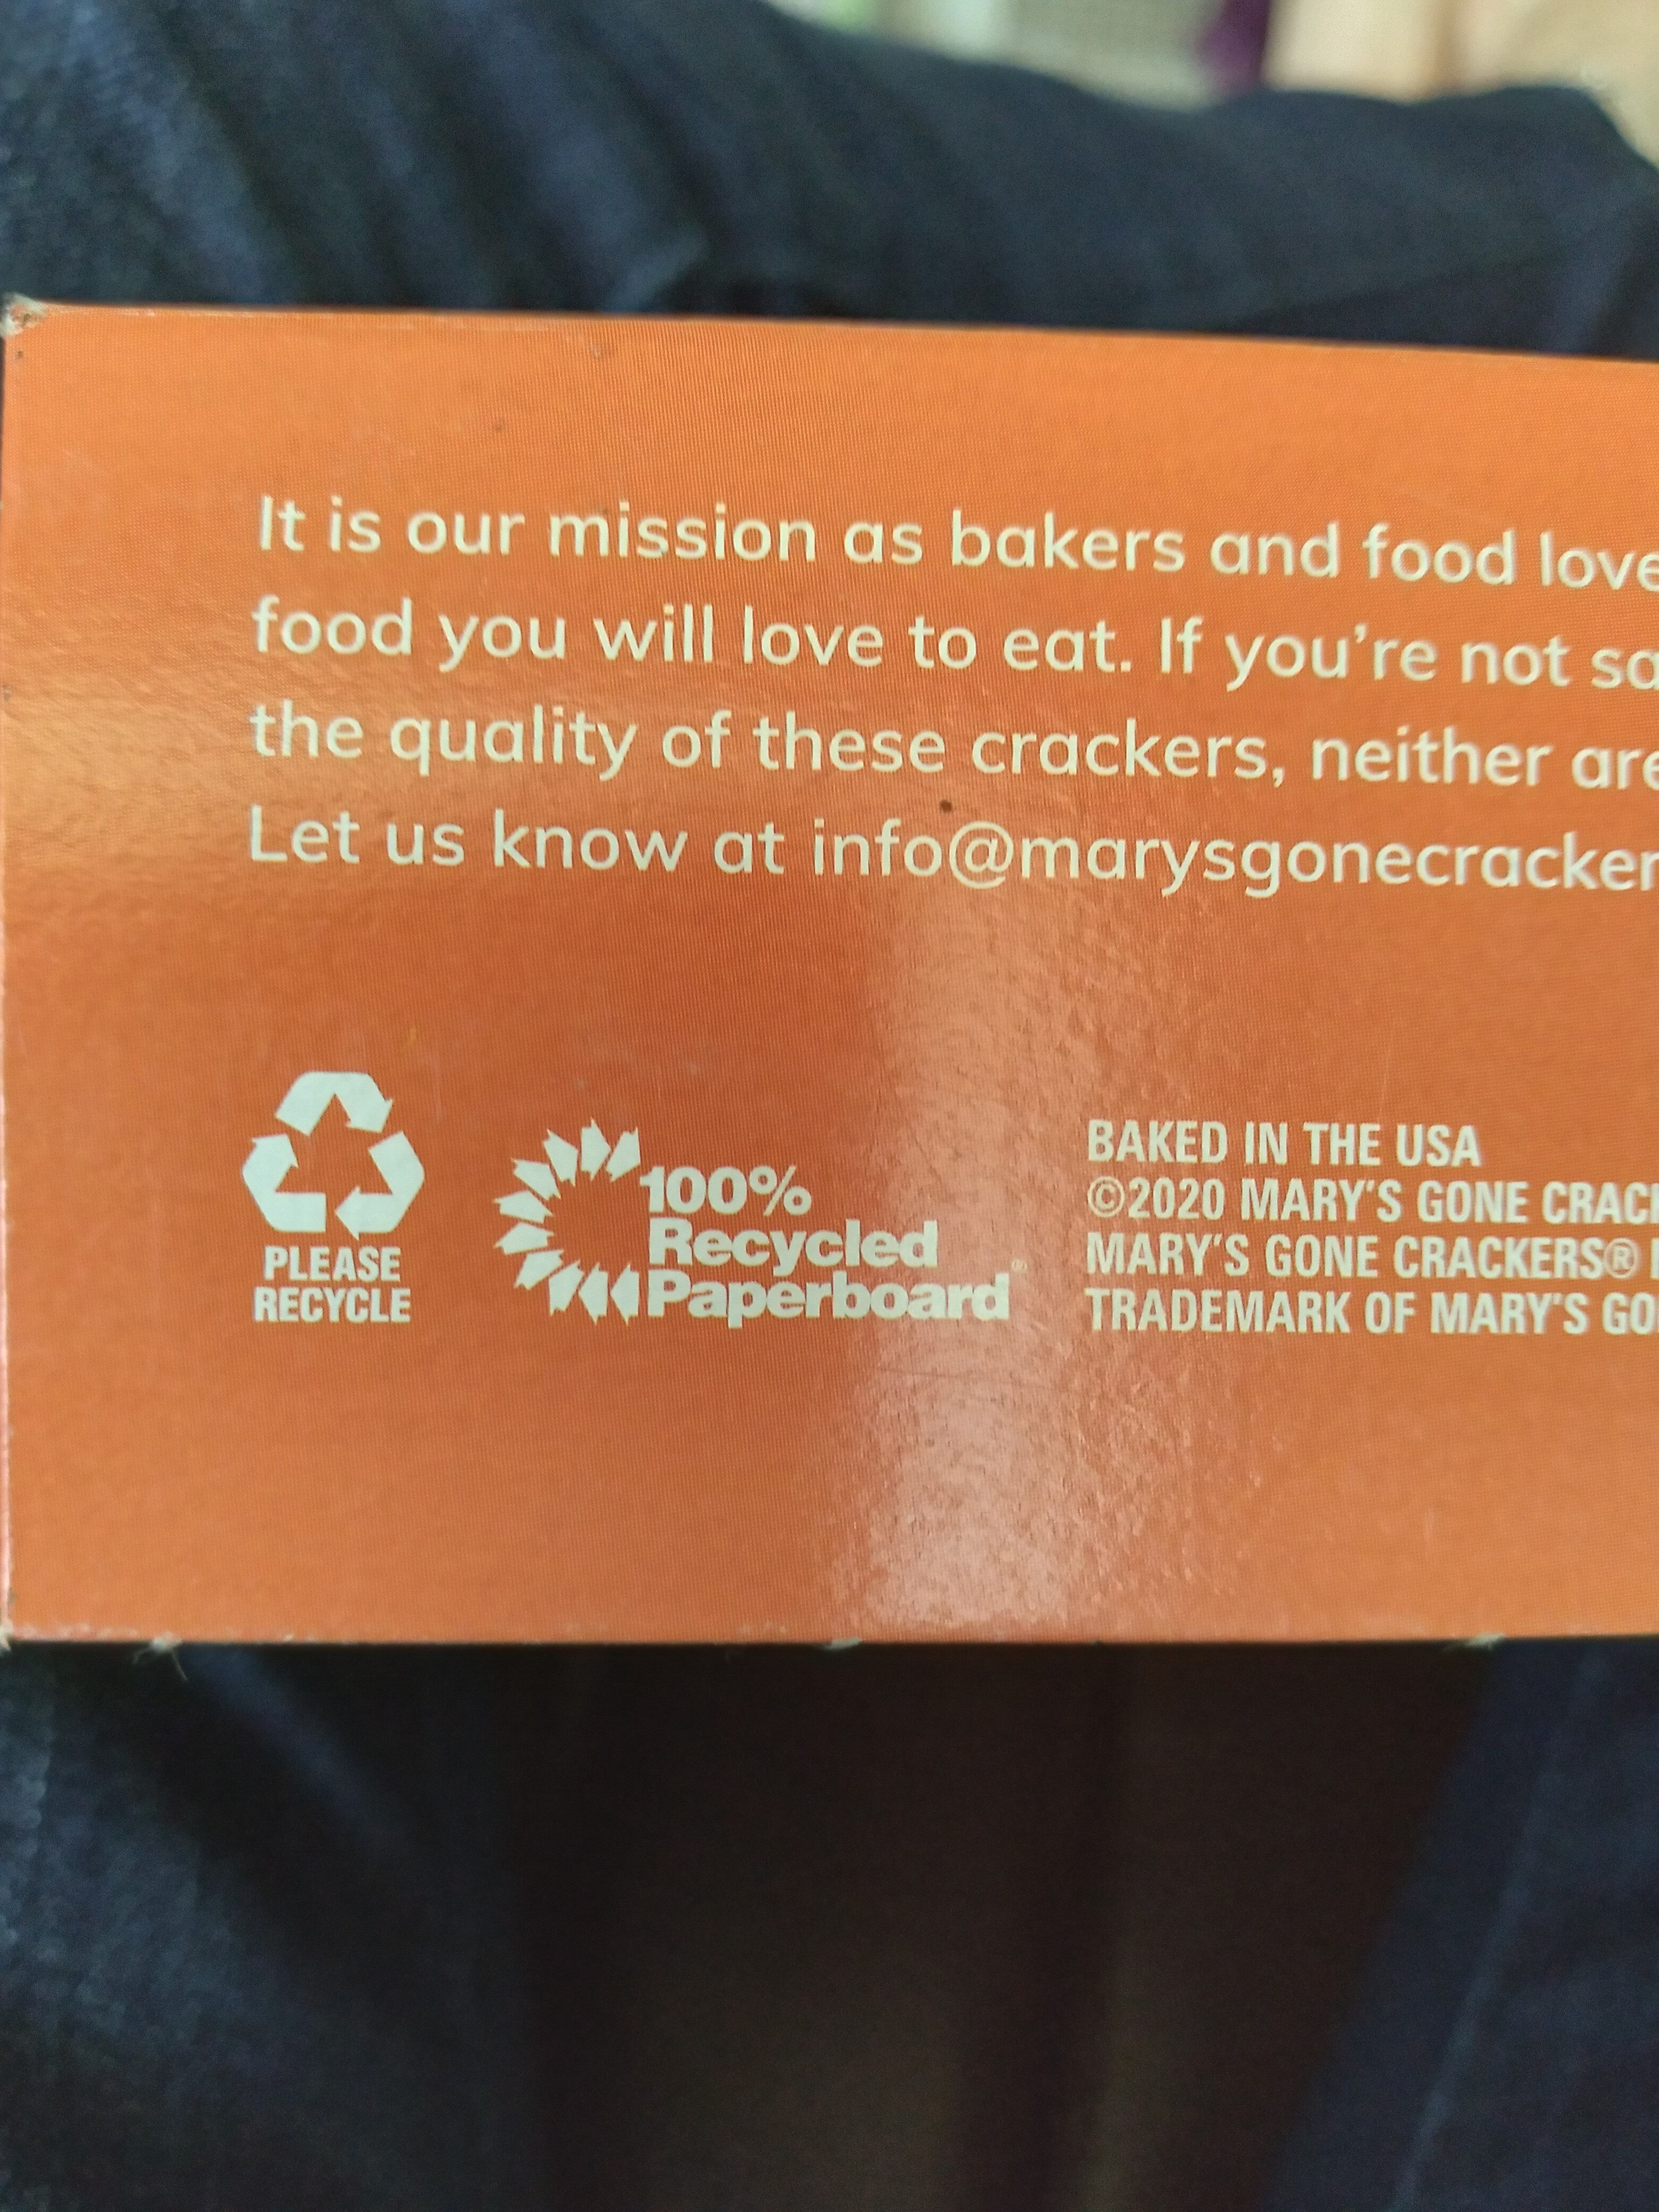 Marys gone crackers cracker evrythng seed g - Instruction de recyclage et/ou informations d'emballage - en